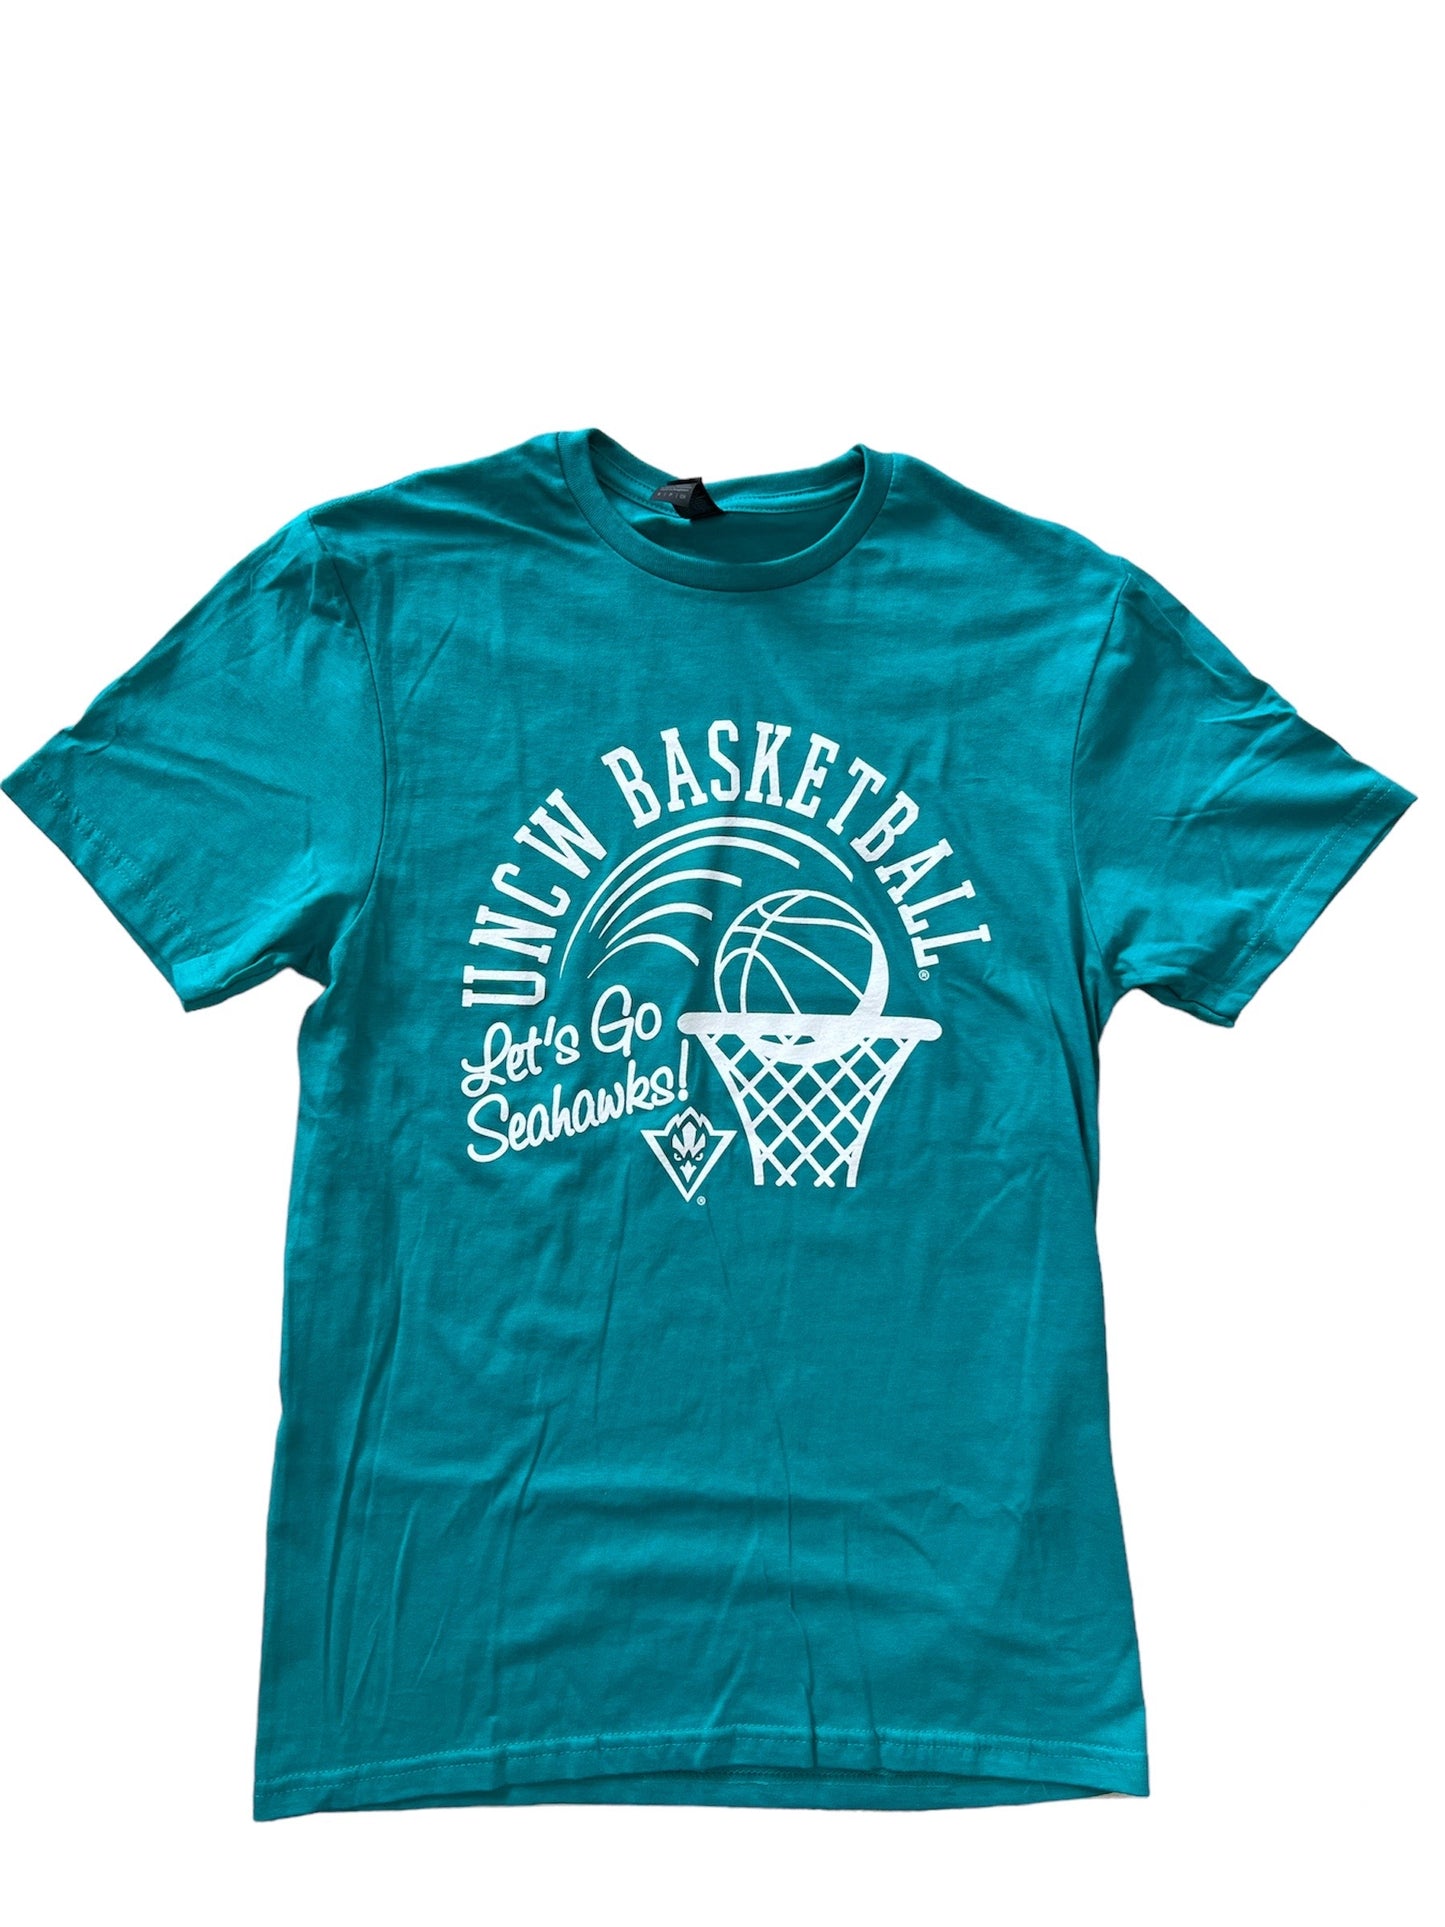 UNCW Basketball - T Shirt - Teal